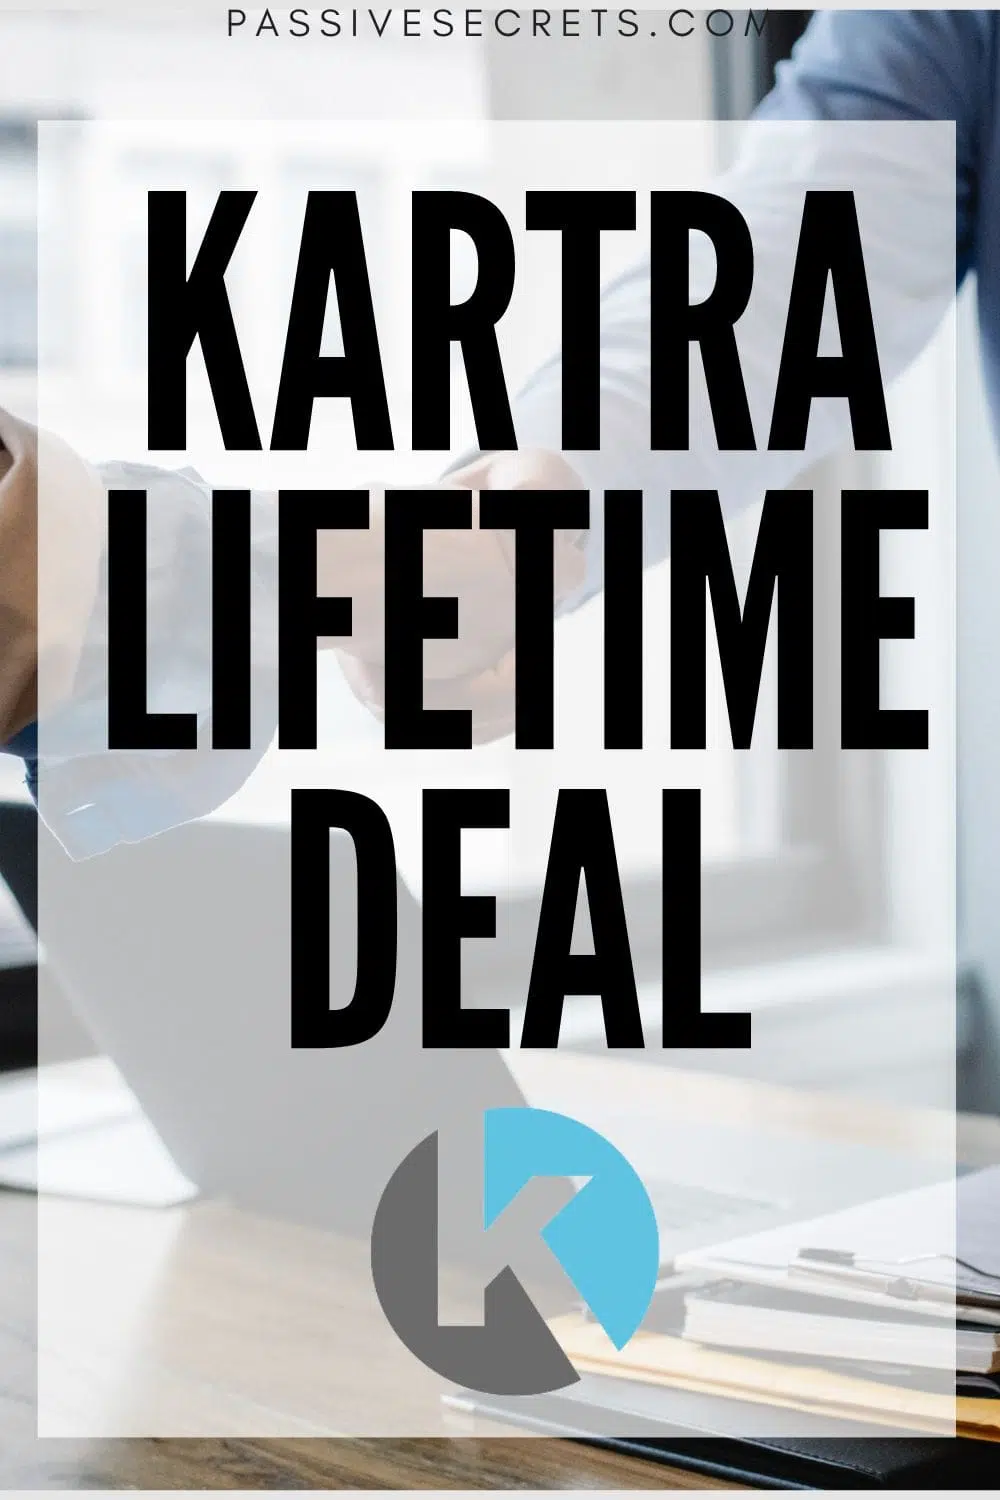 kartra lifetime deal passivesecrets